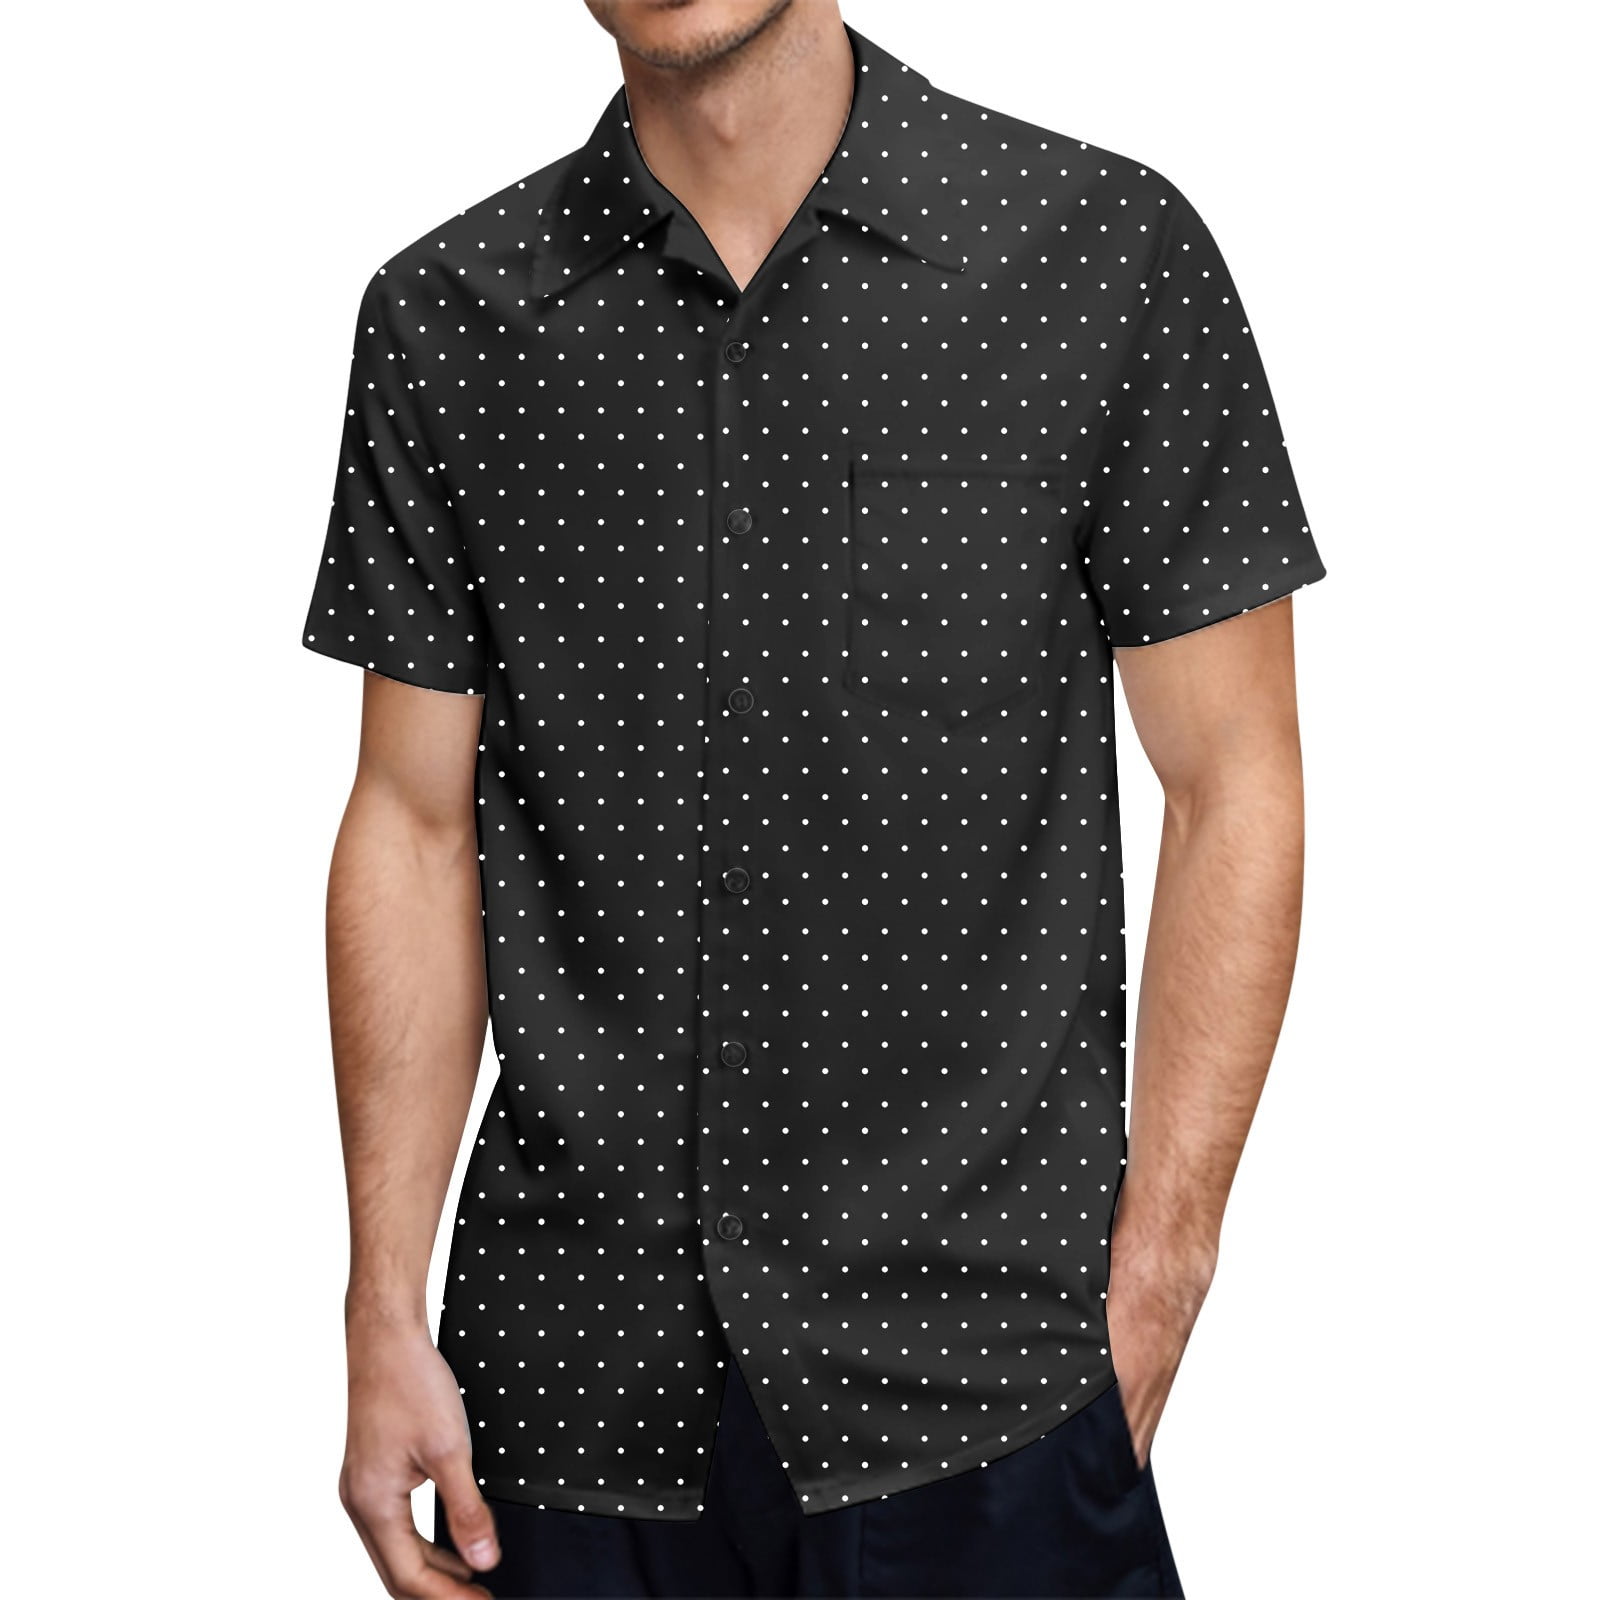 B91xZ Shirts for Men Wrinkle Free Short Sleeve Button Down Shirt,Black XL 